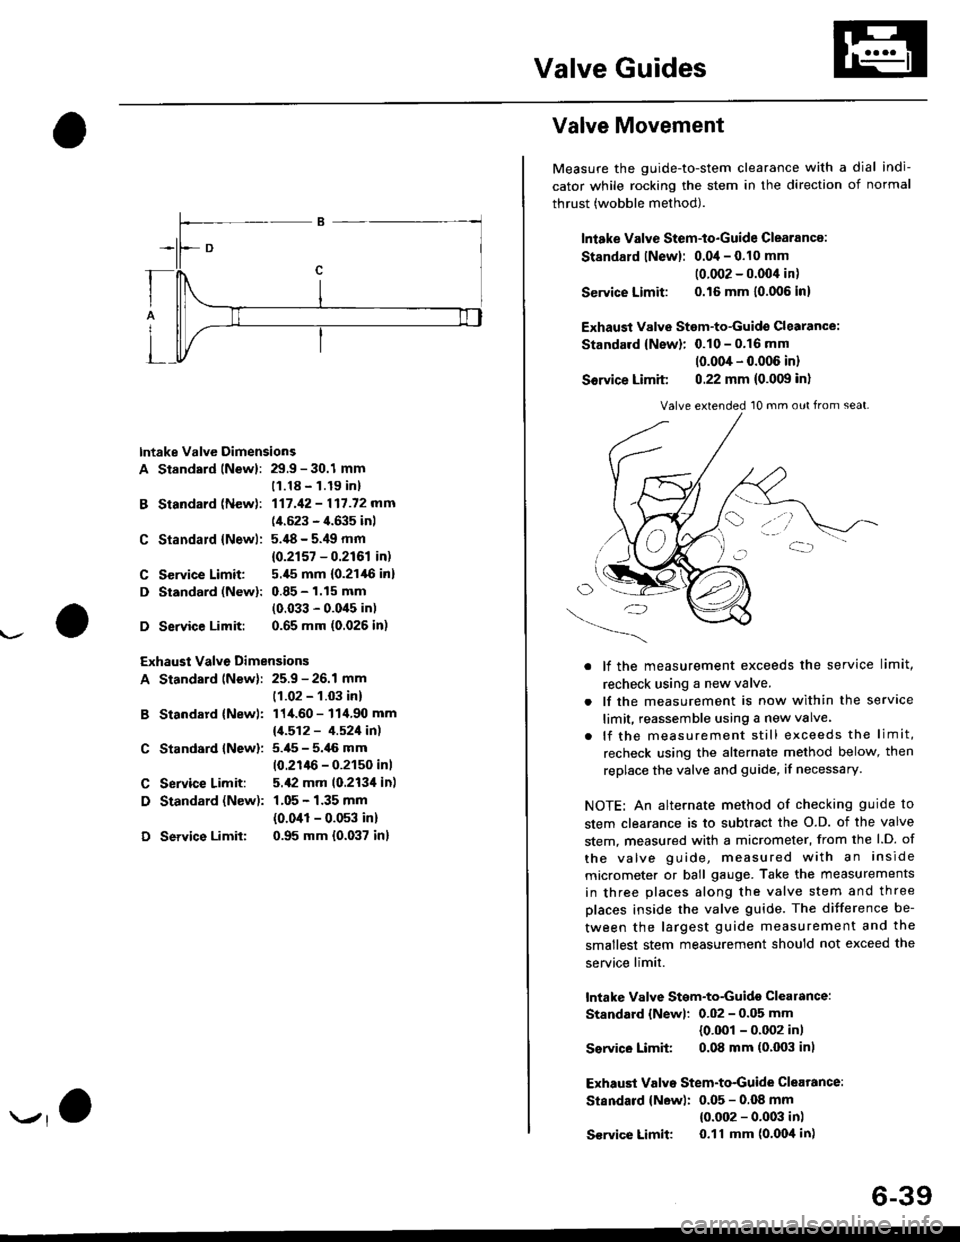 HONDA CIVIC 1996 6.G Workshop Manual Valve Guides
lntake Valve Dimensions
A Standsrd lNewl: 29.9 - 30.1 mm
B Standard (New):
C Standald {Newl:
C Service Limit:
D Standard (New):
D Service Limit:
11.18 - 1.19 inl
117.42 - 117.72 mm
(4.523